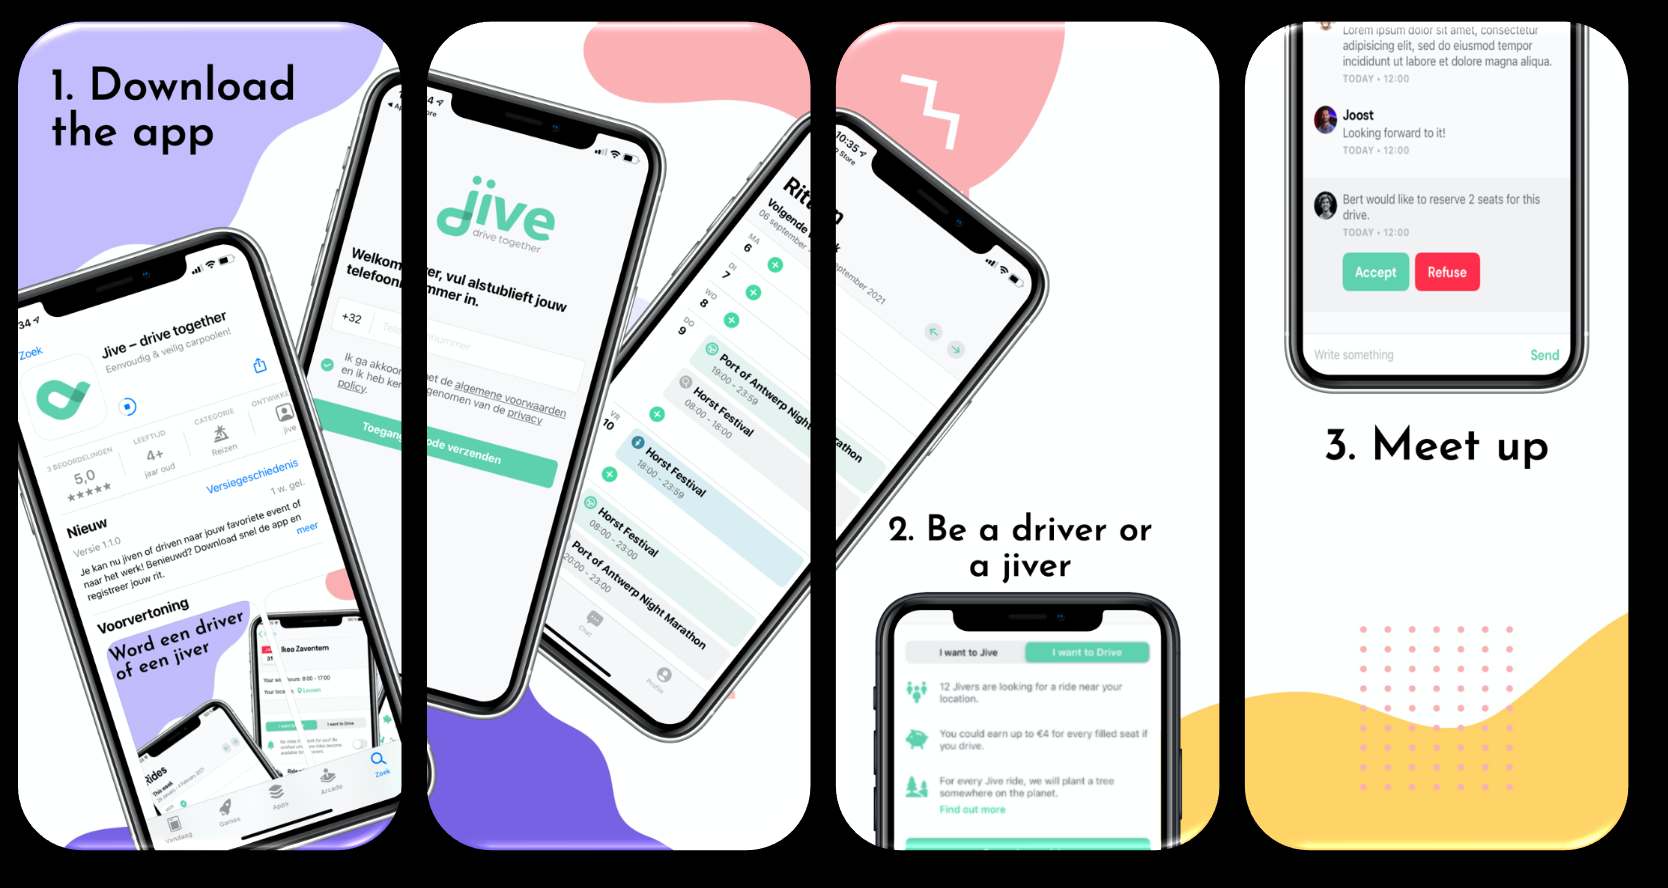 jive or drive in 3 steps